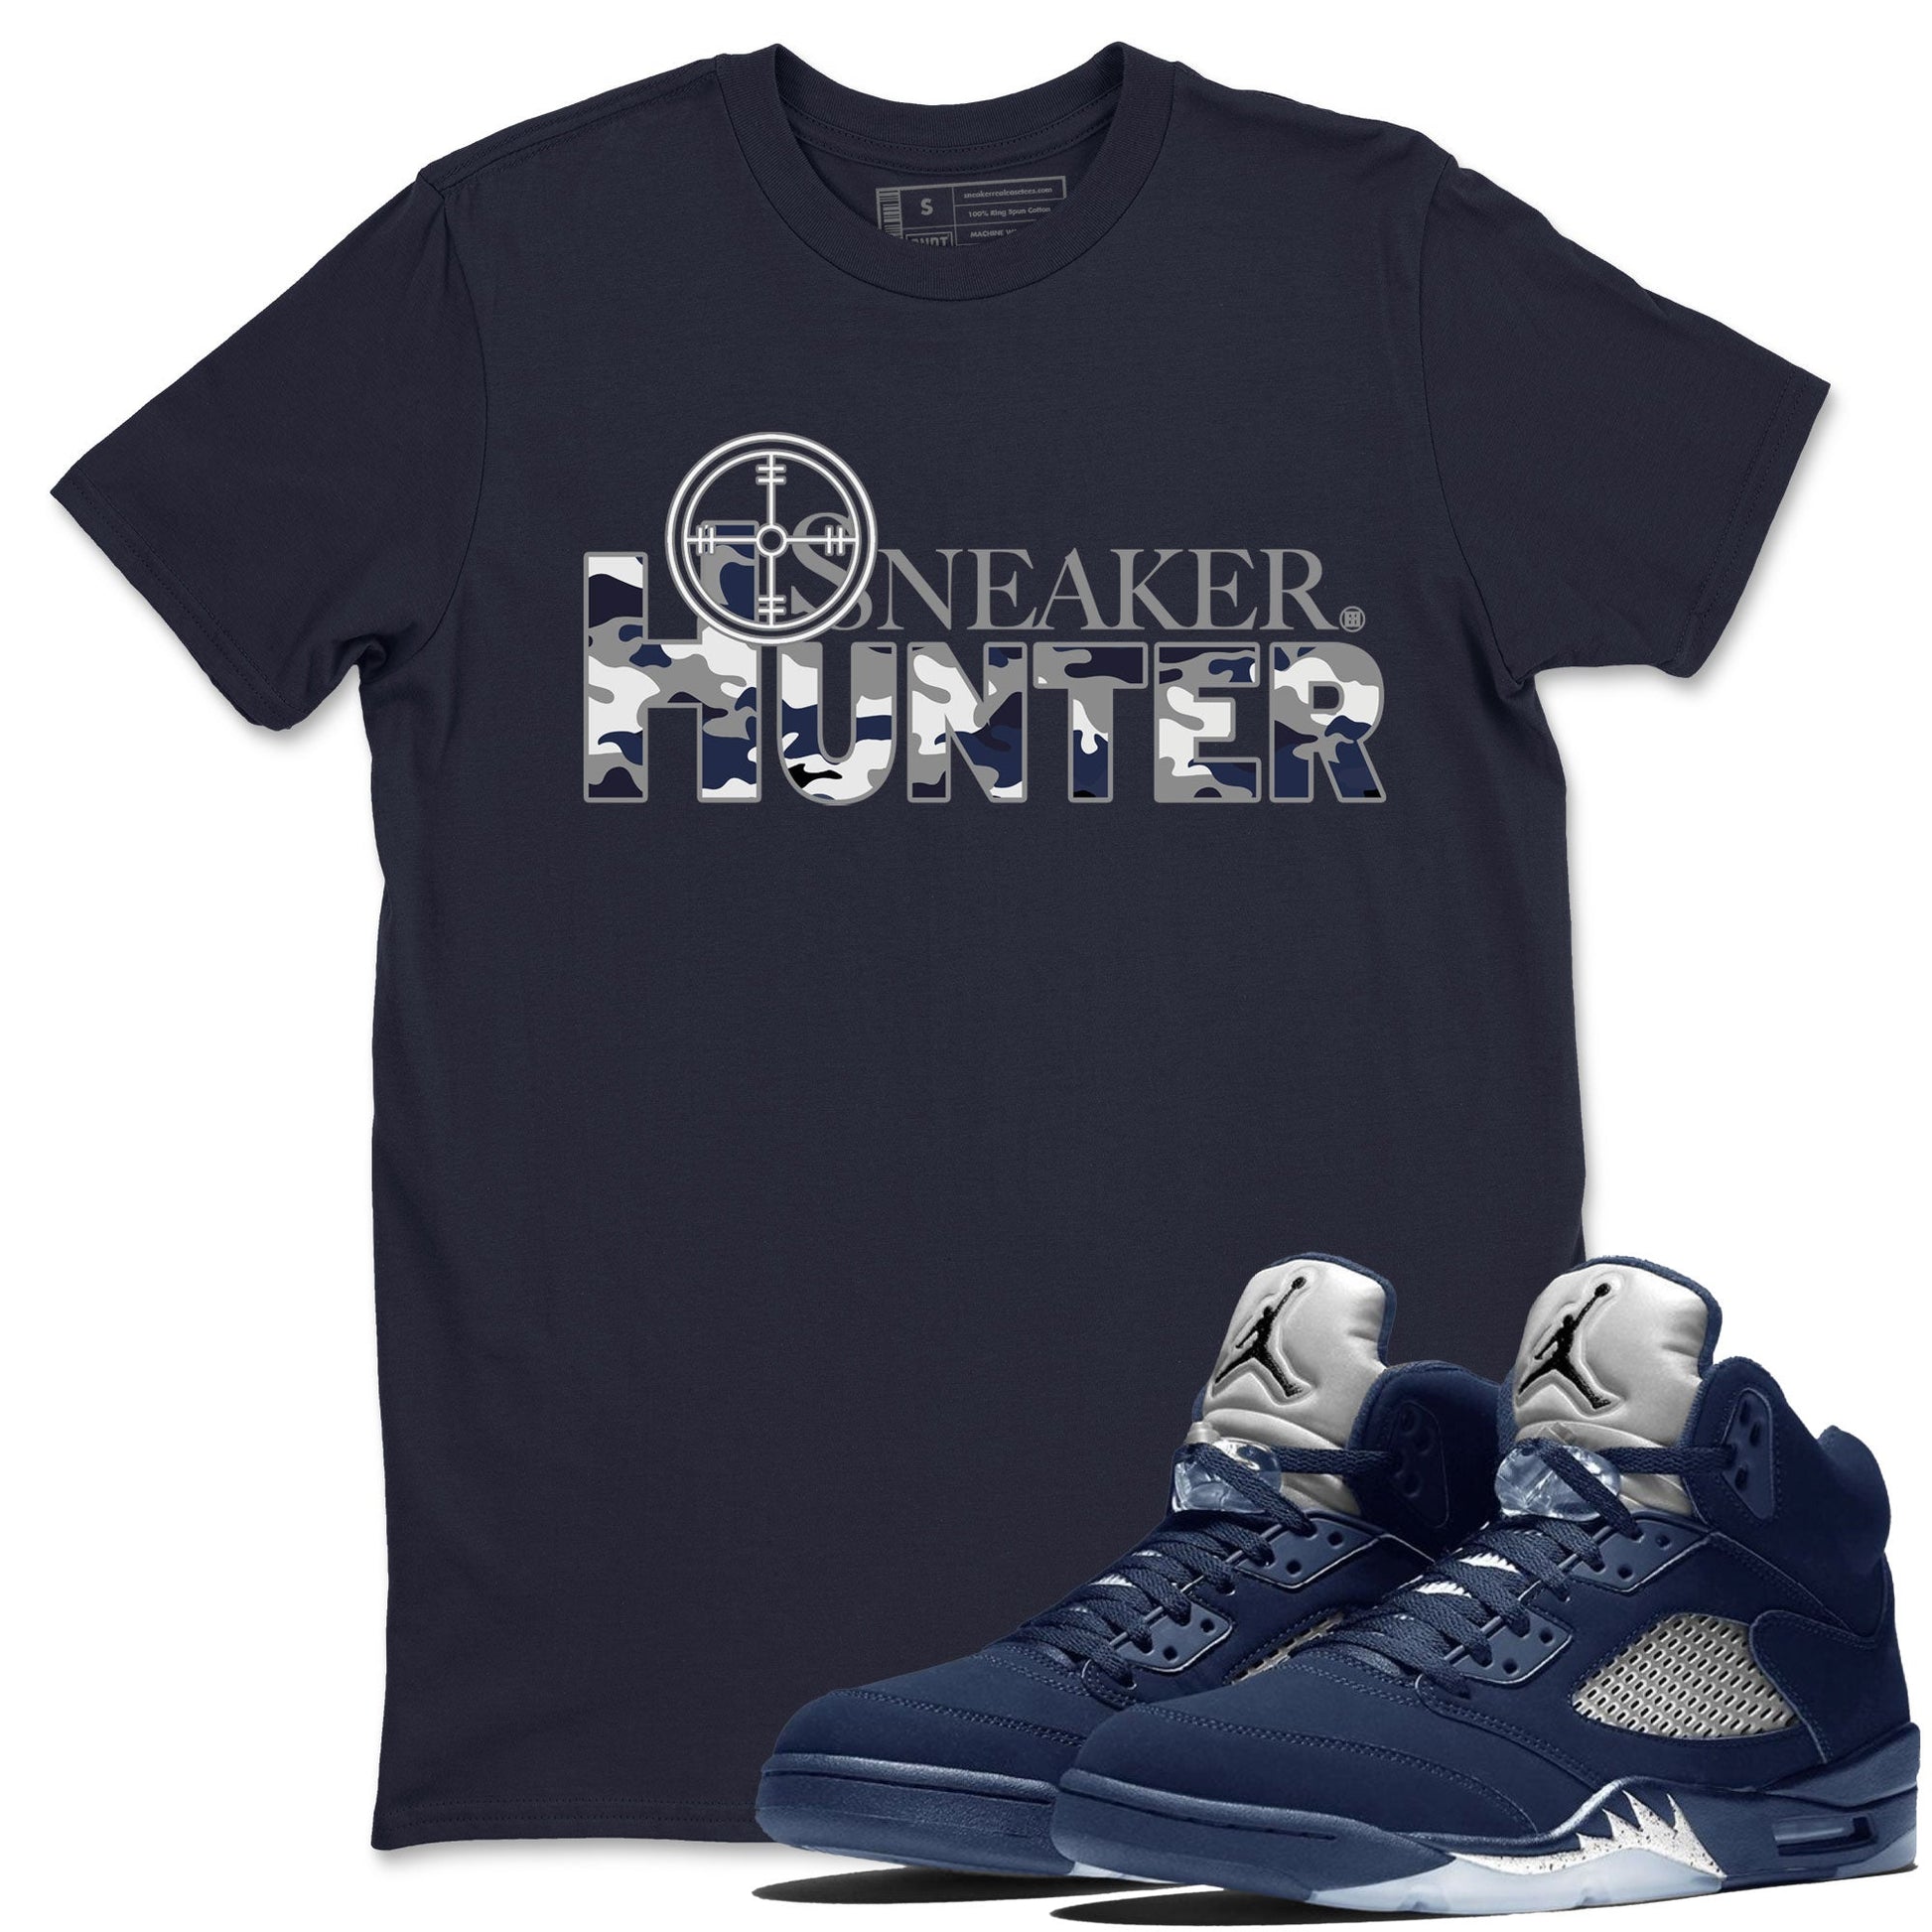 Air Jordan 5 Retro Midnight Navy shirt to match jordans Sneaker Hunter sneaker tees Air Jordan 5 Midnight Navy SNRT Sneaker Release Tees Unisex Navy 1 T-Shirt